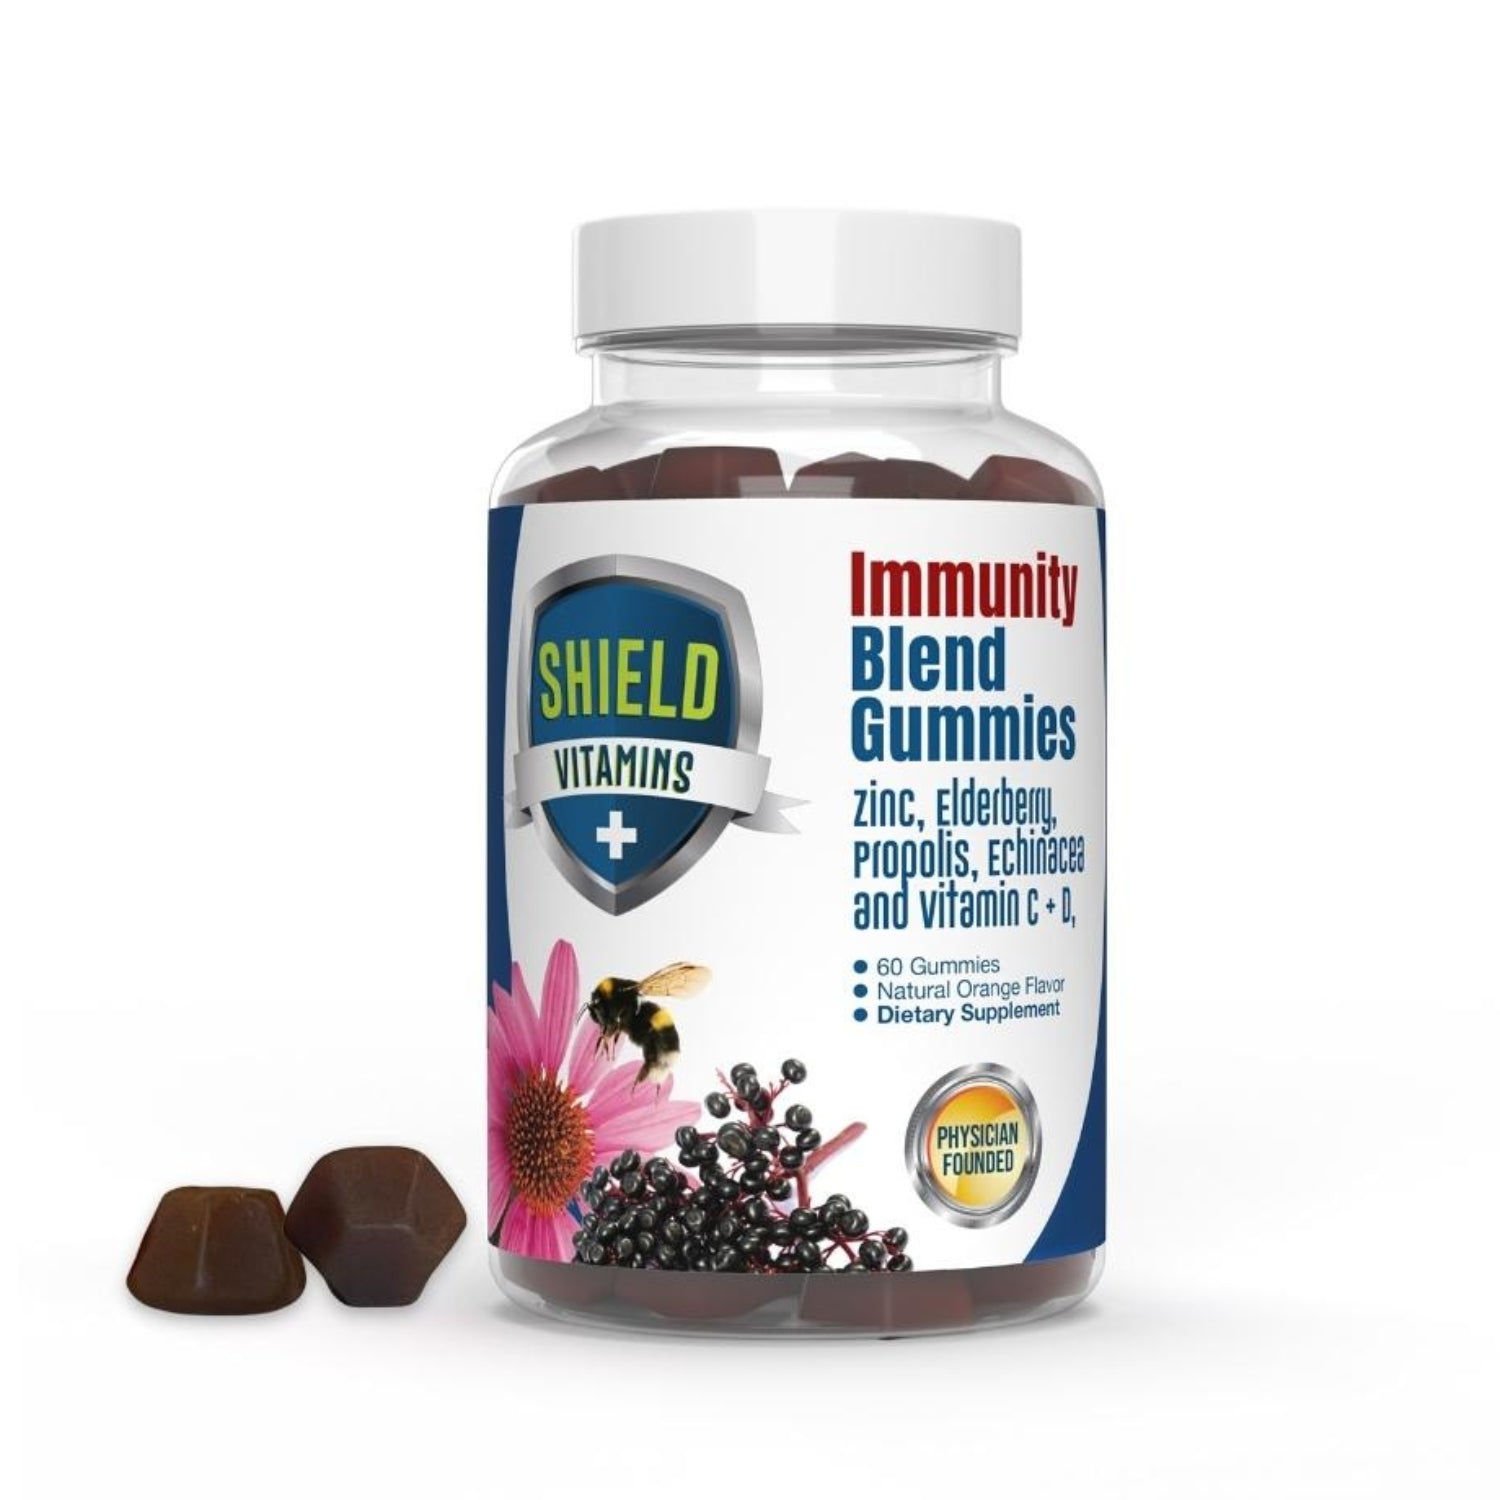 Immunity Blend Gummies